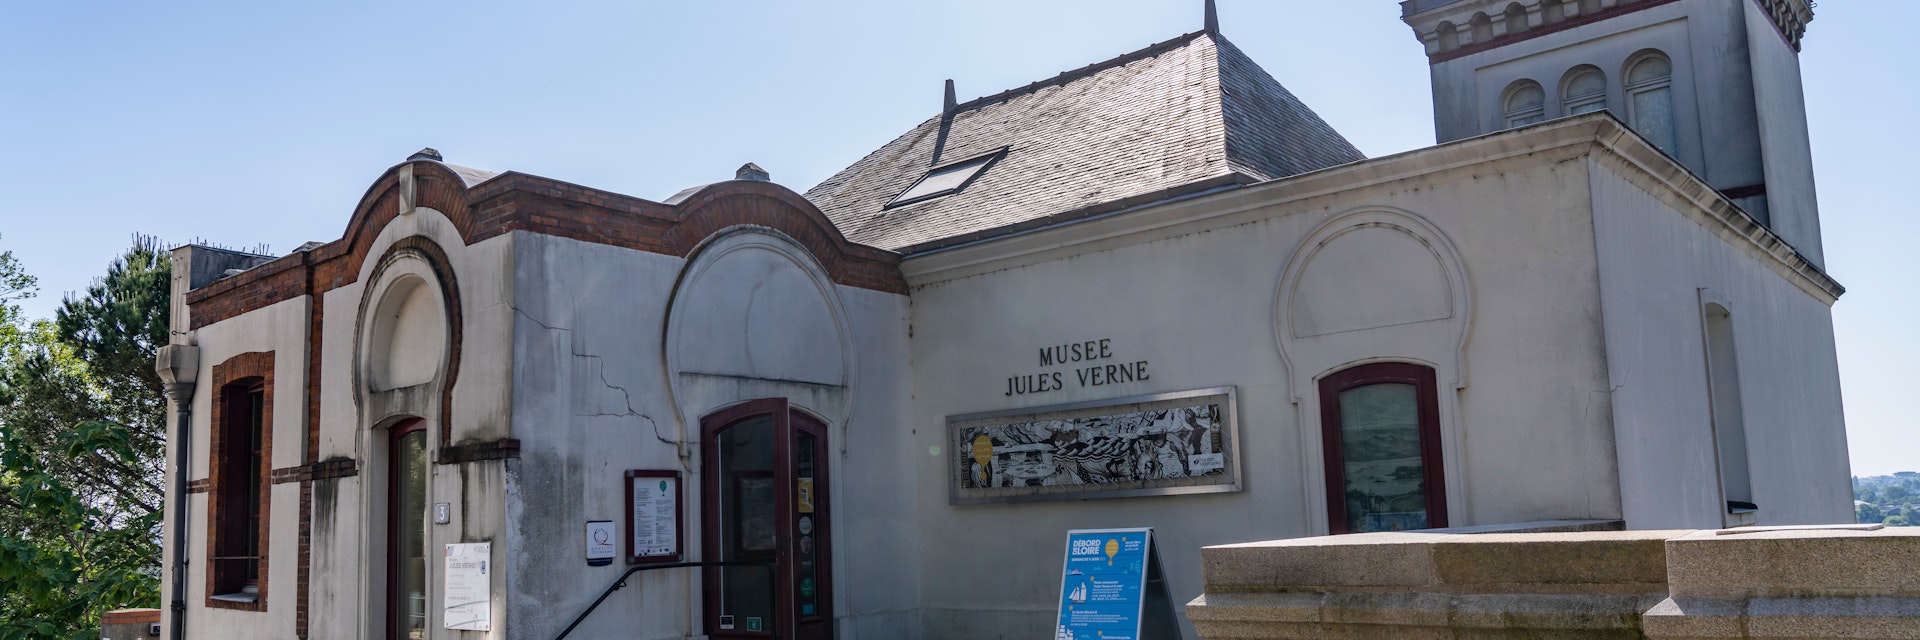 Jules Verne museum in Nantes.